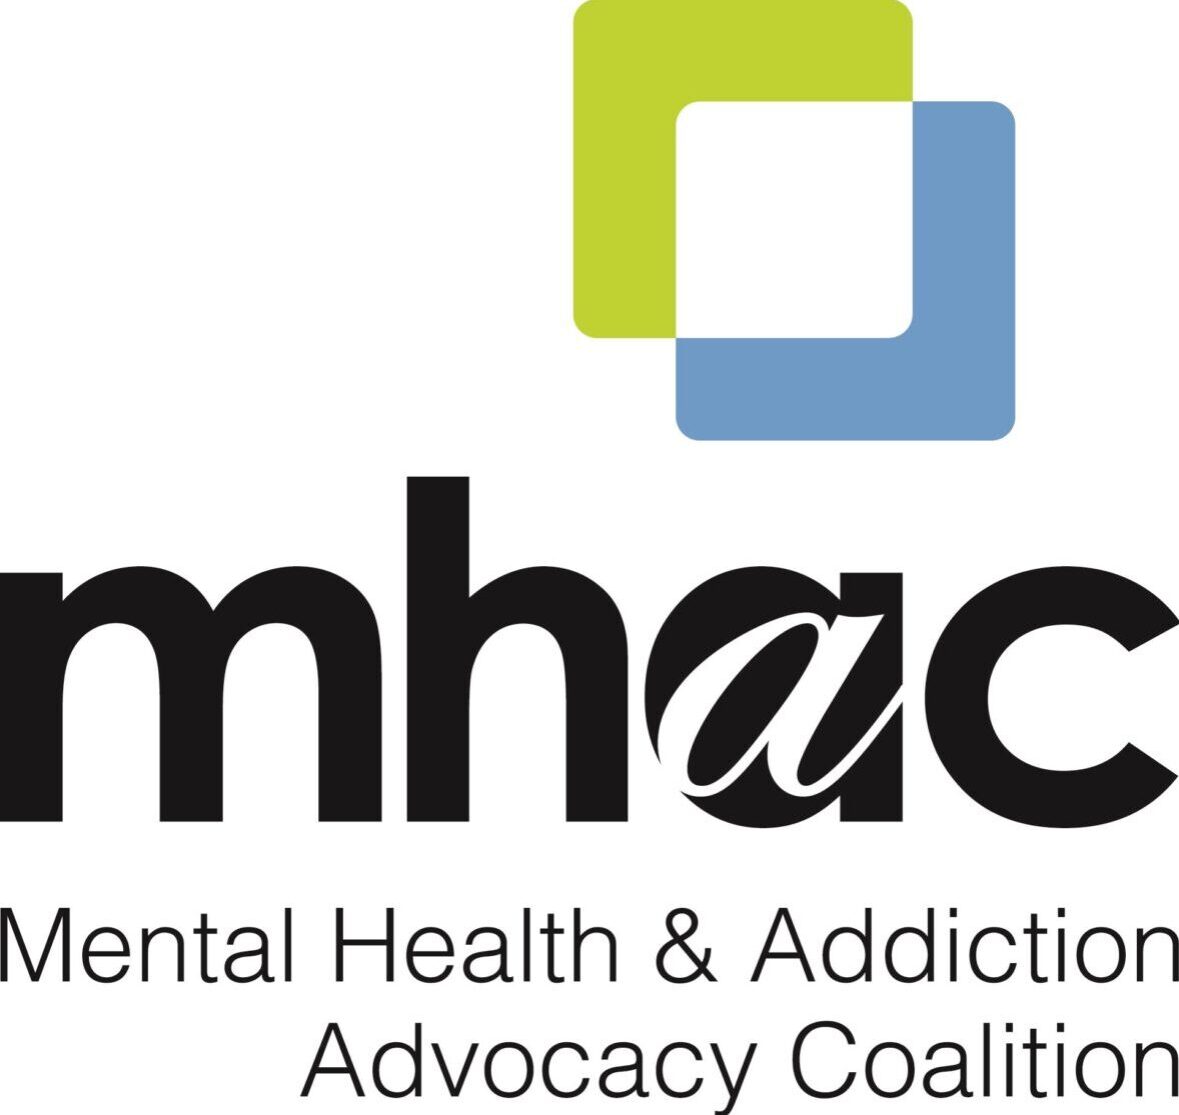 Mental Health & Addiction Advocacy Coalition 